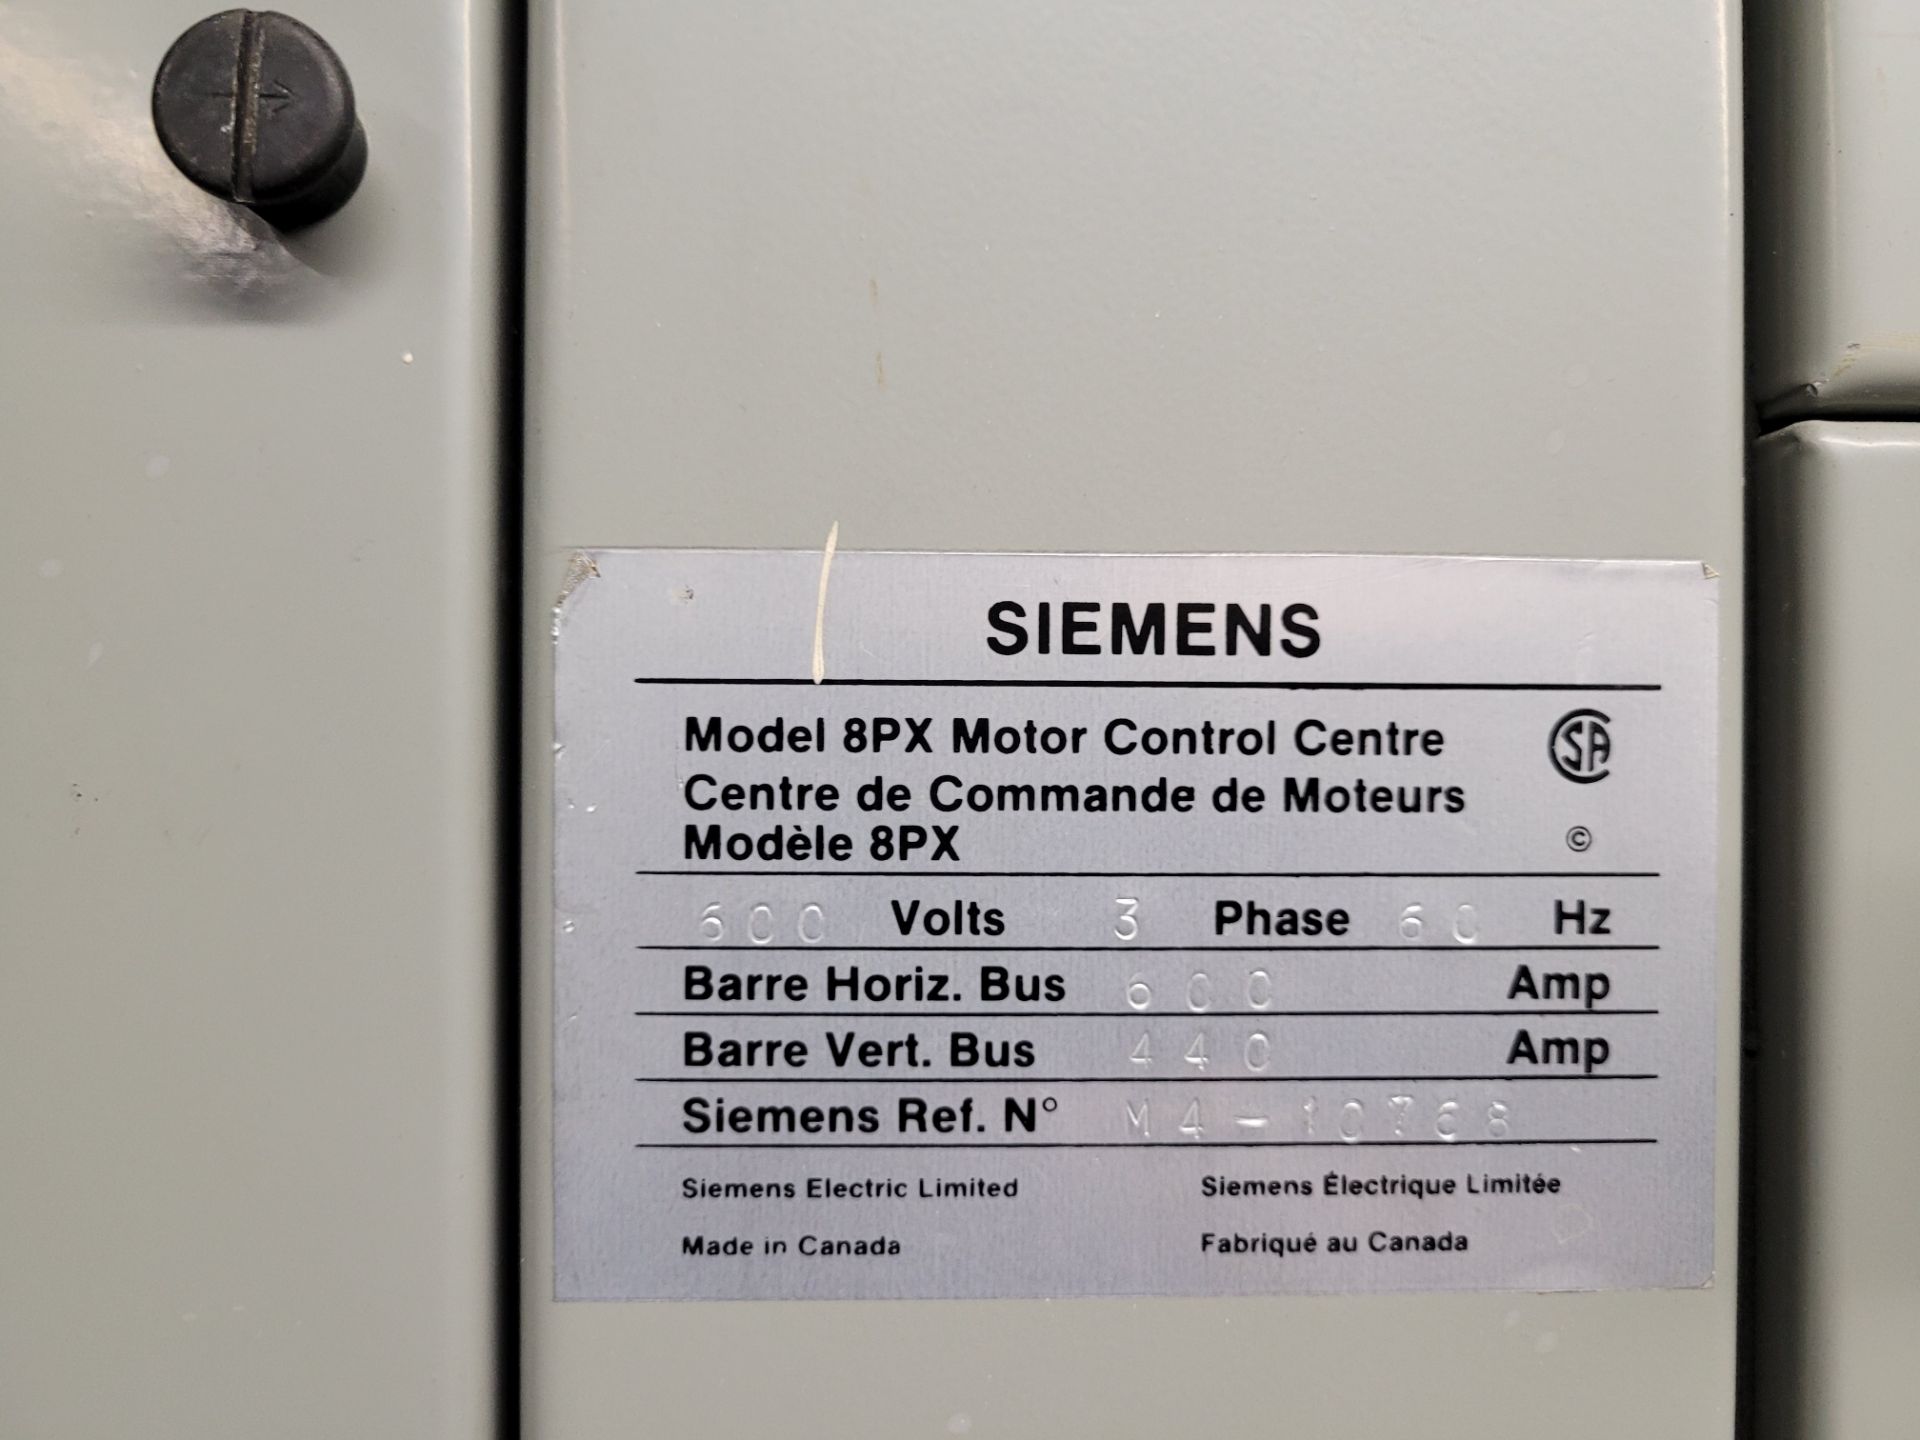 SIEMENS Model 8PX Motor Control Center 600V 3 Ph 60Hz ref. M4-10768 - Image 5 of 19